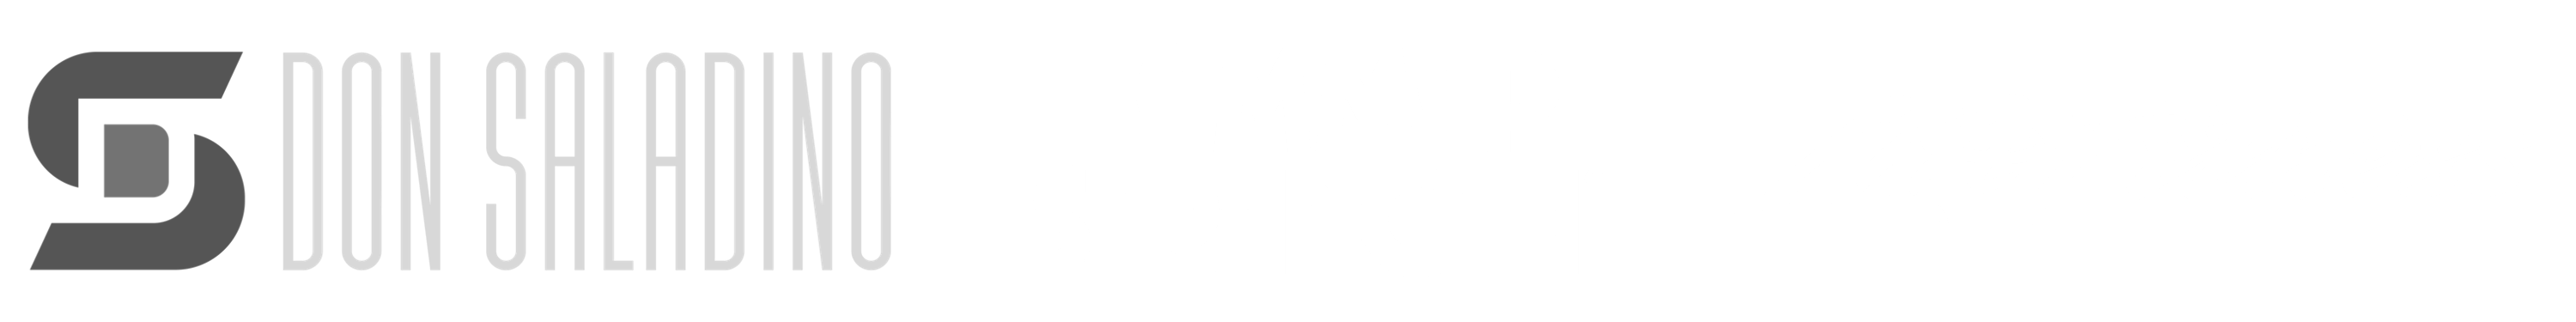 Don Saladino | Hammer Strength | Life Fitness